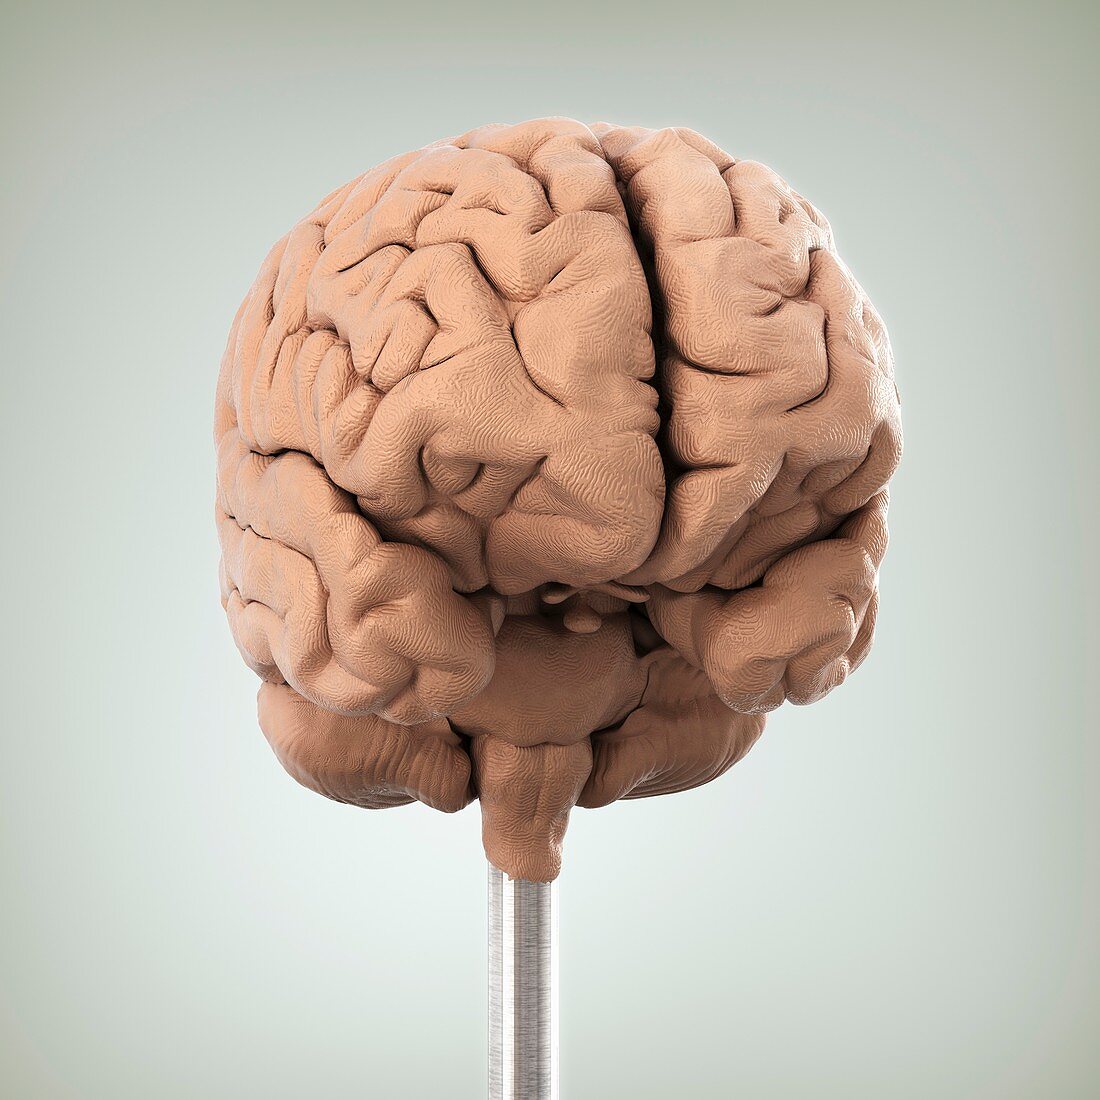 Clay Model of Brain, artwork